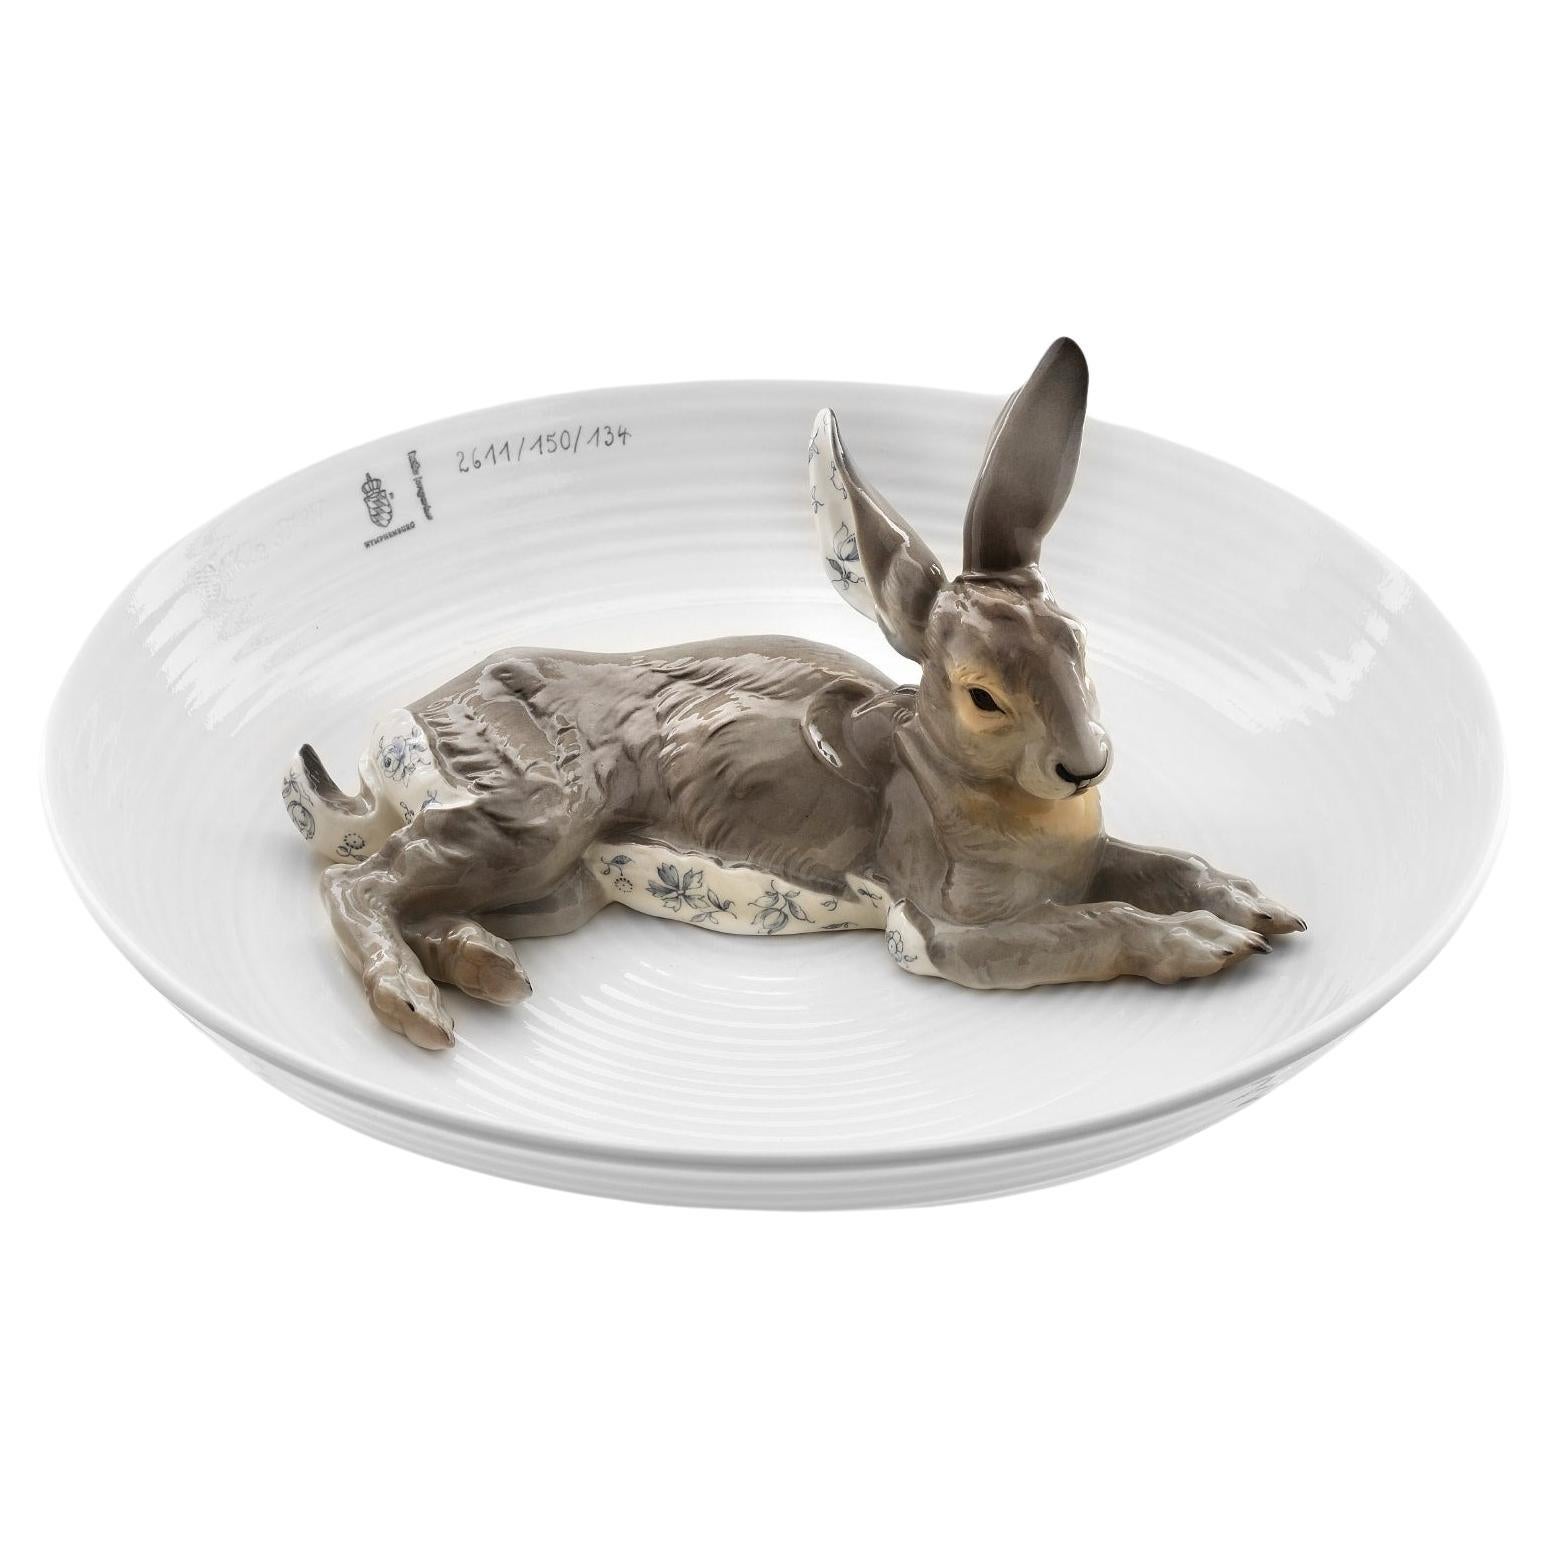 Hella Jongerius Animal Bowl Rabbit, Design Must Have, Serving Bowl, Decorative 